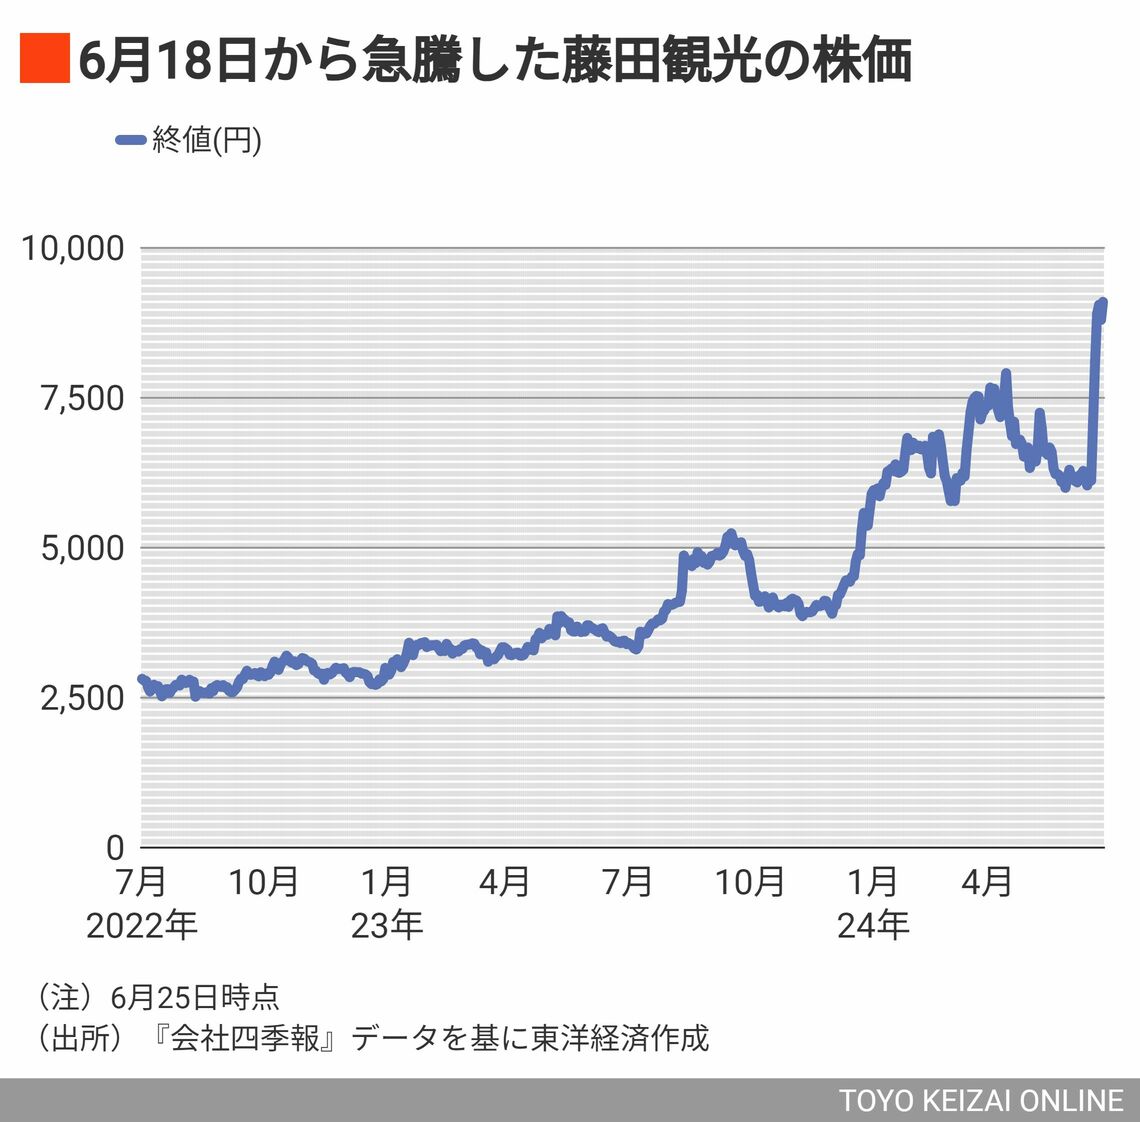 藤田観光の株価推移